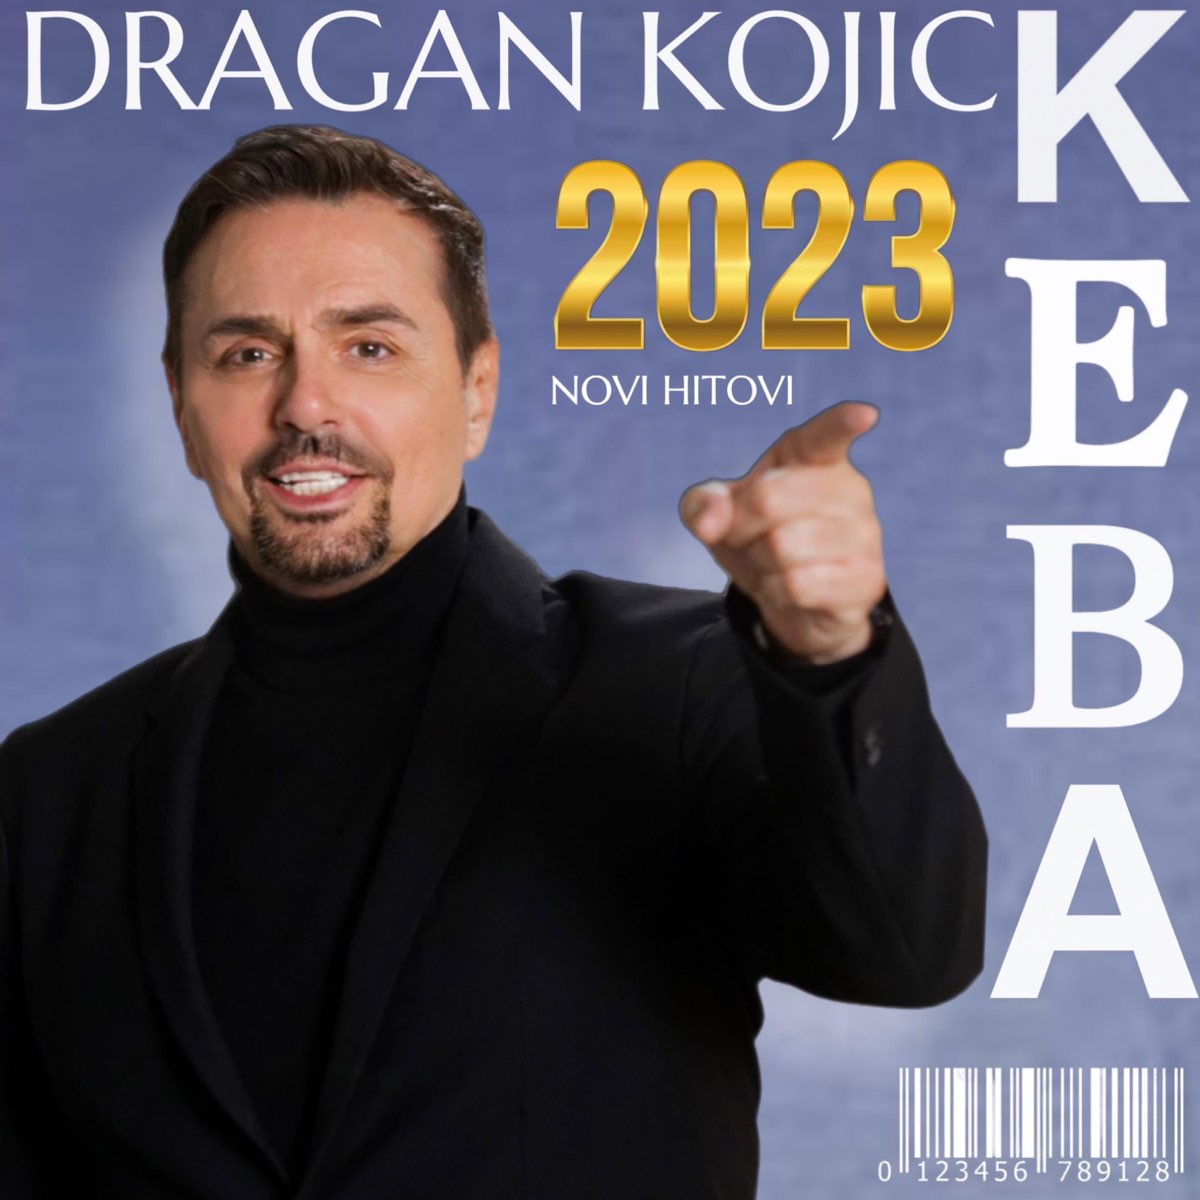 ‎2023 Novi Hitovi by Dragan Kojic Keba on Apple Music